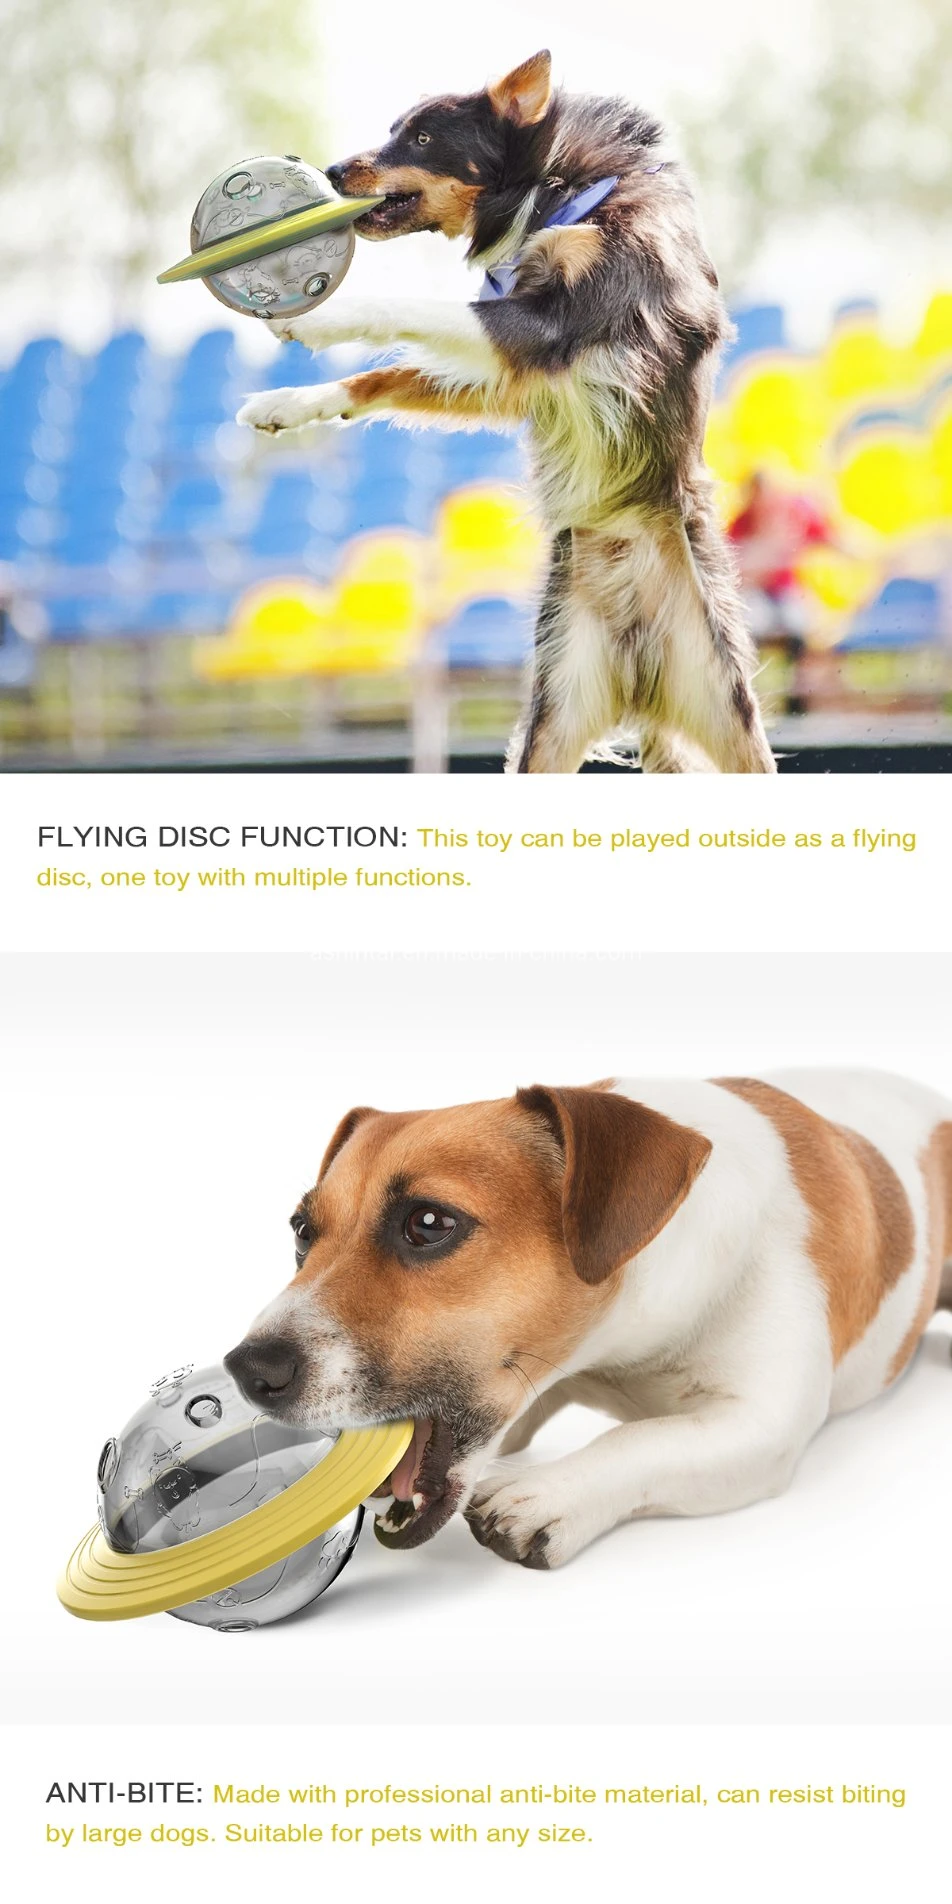 Pet Supply UFO Interactive Iq Dog Chew Treat Dispensing Balls Toys Slow Feeder Dog Toys